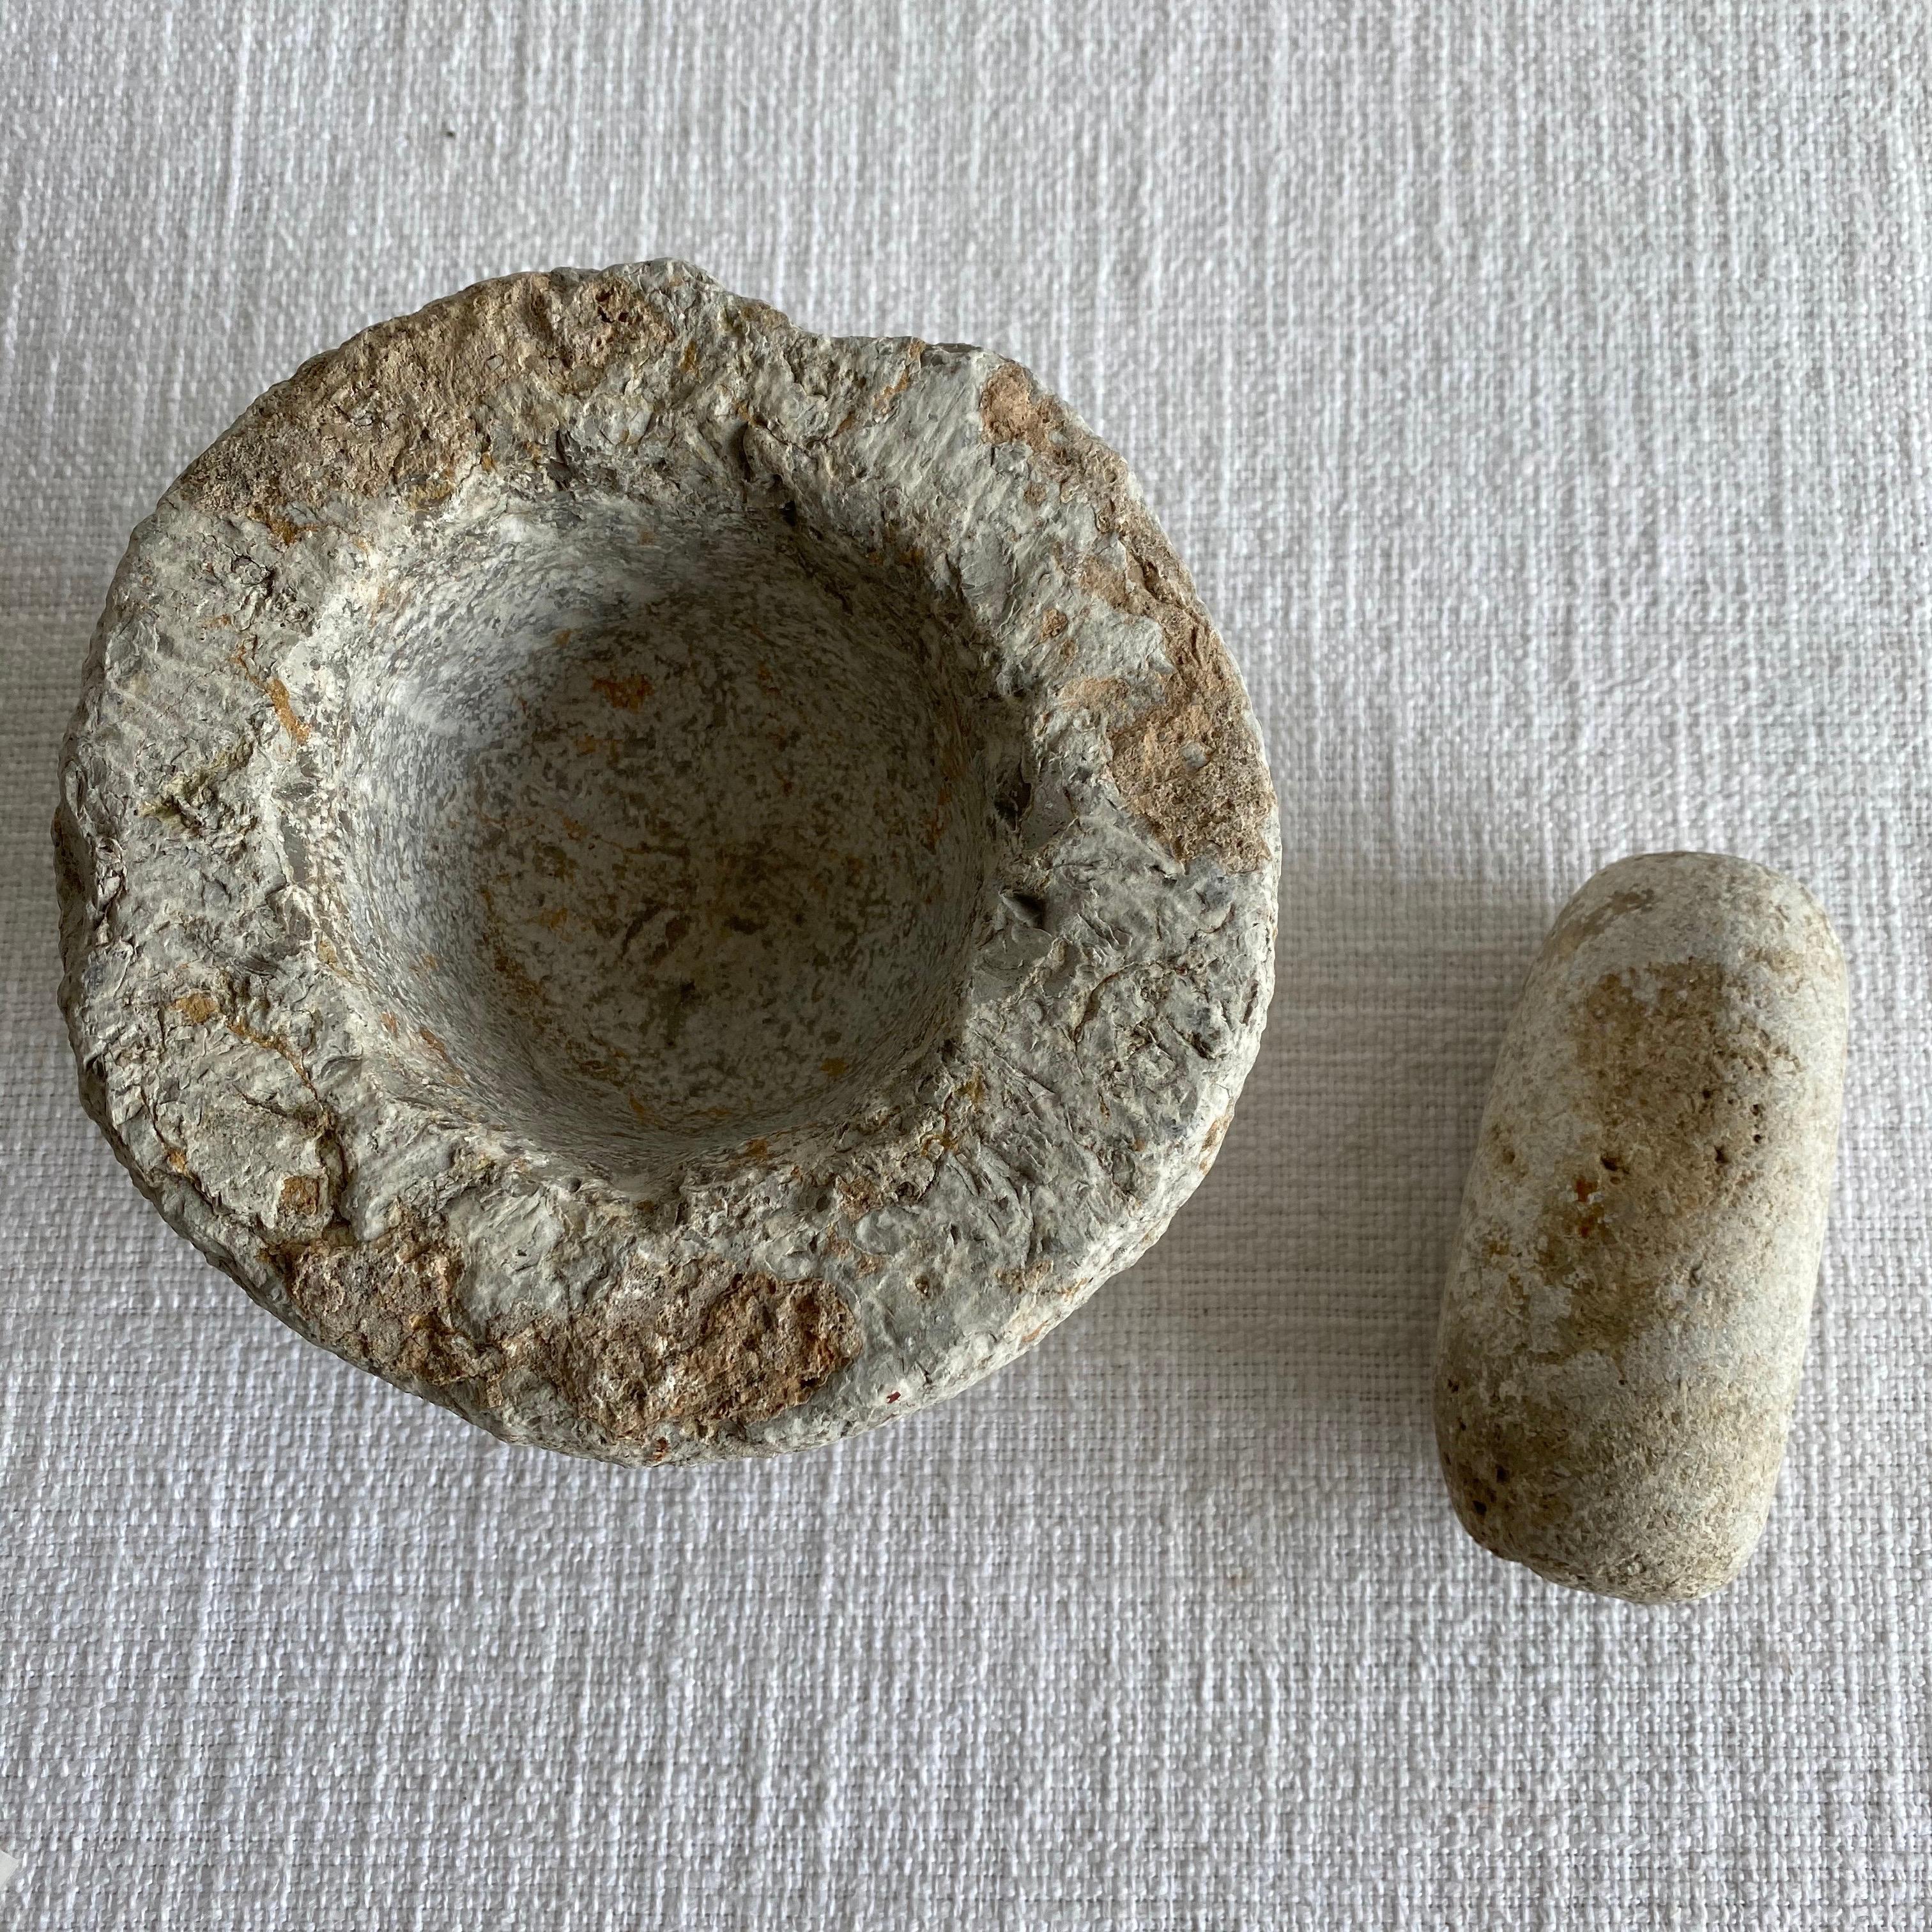 Antique stone mortar and pestle bowl set
Size: 7.5